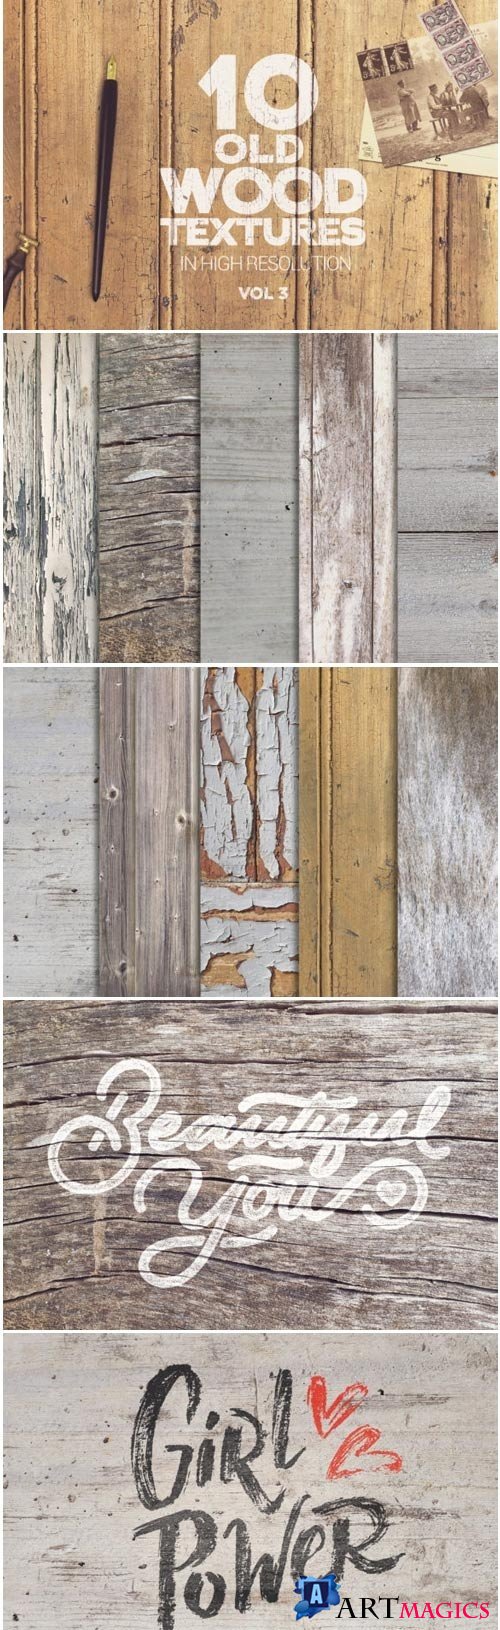 Old Wood Textures Vol 3 x10 - 3976429